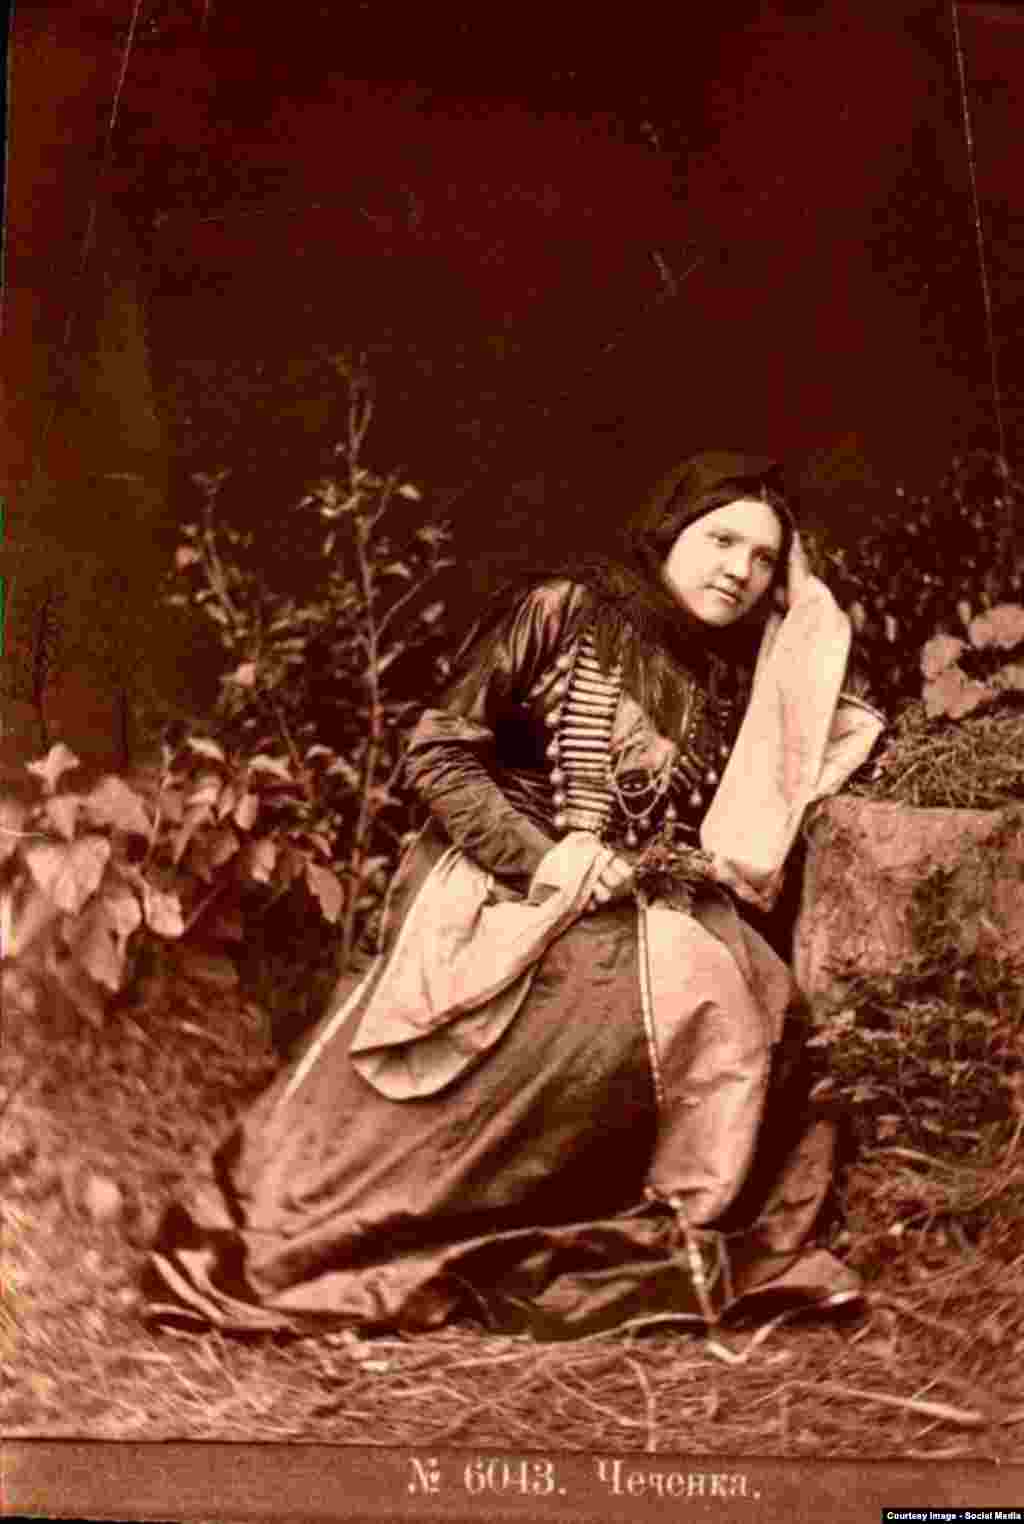 Чеченка, дочь Генжуева из Воздвиженска. Фотография Д. Ермакова.